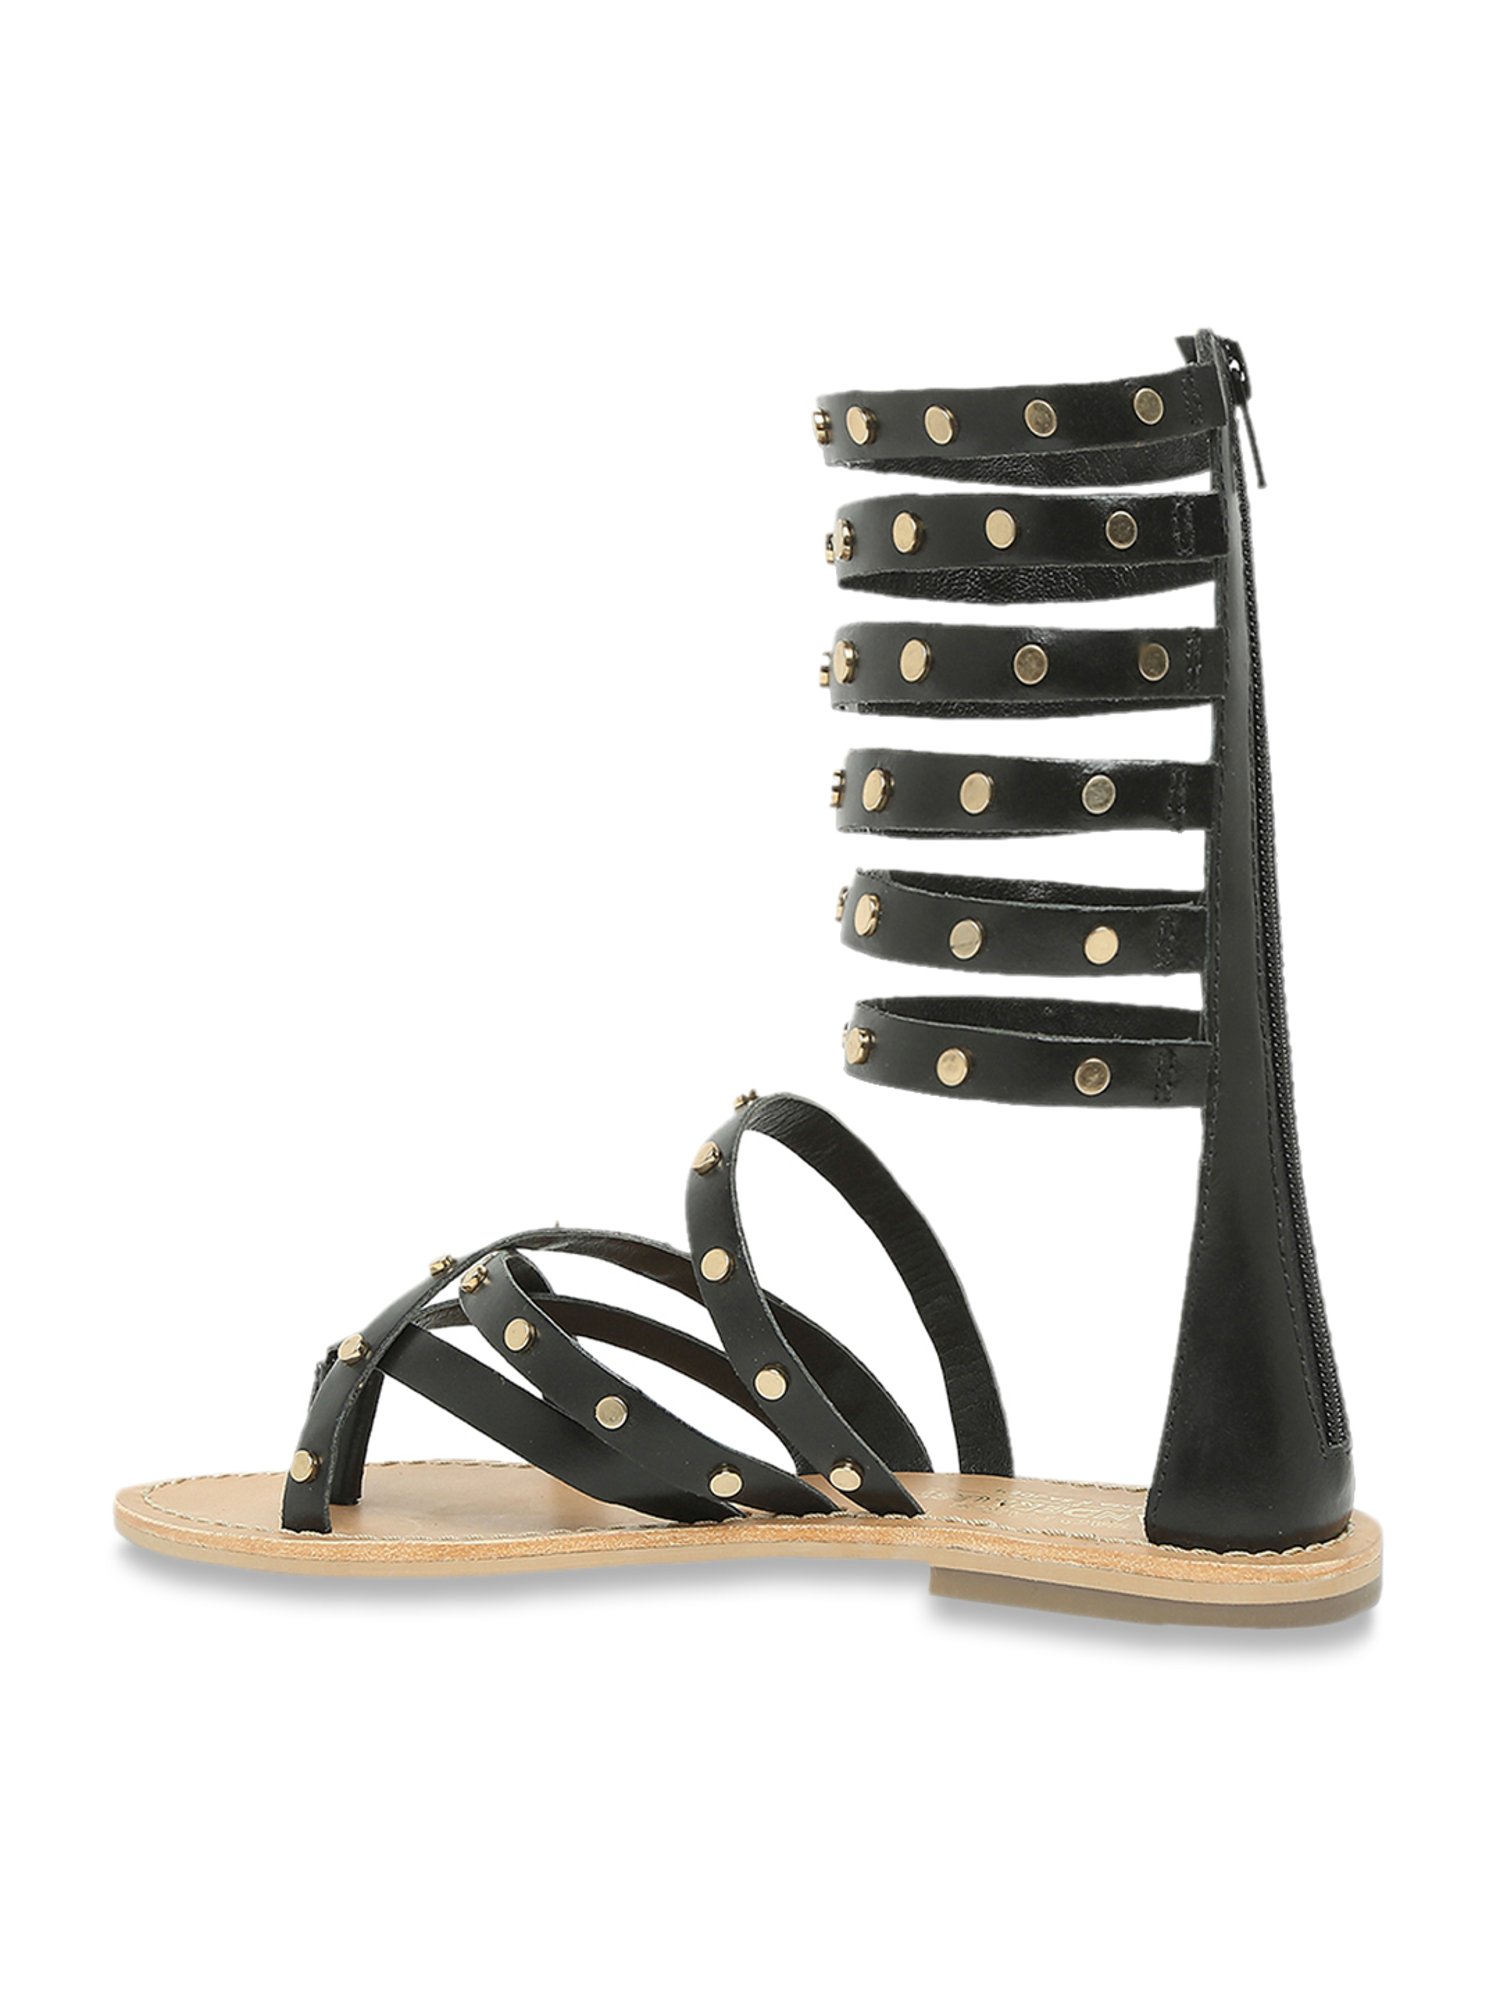 Jessica Simpson Larsenn Black Leather Gold Studs Gladiator Heels Sandals Sz  6.5M | eBay